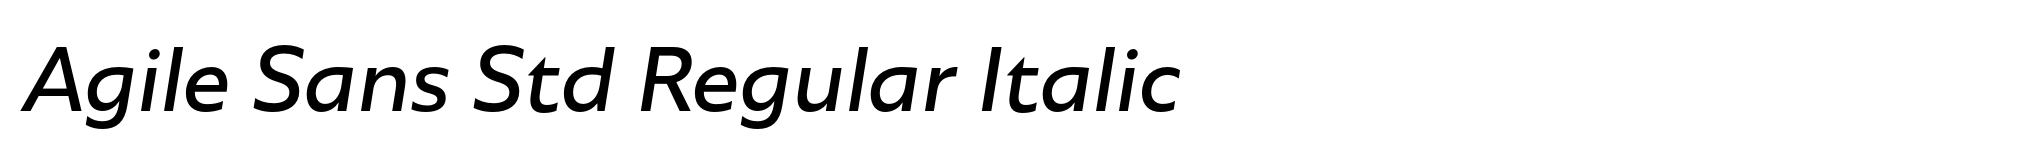 Agile Sans Std Regular Italic image